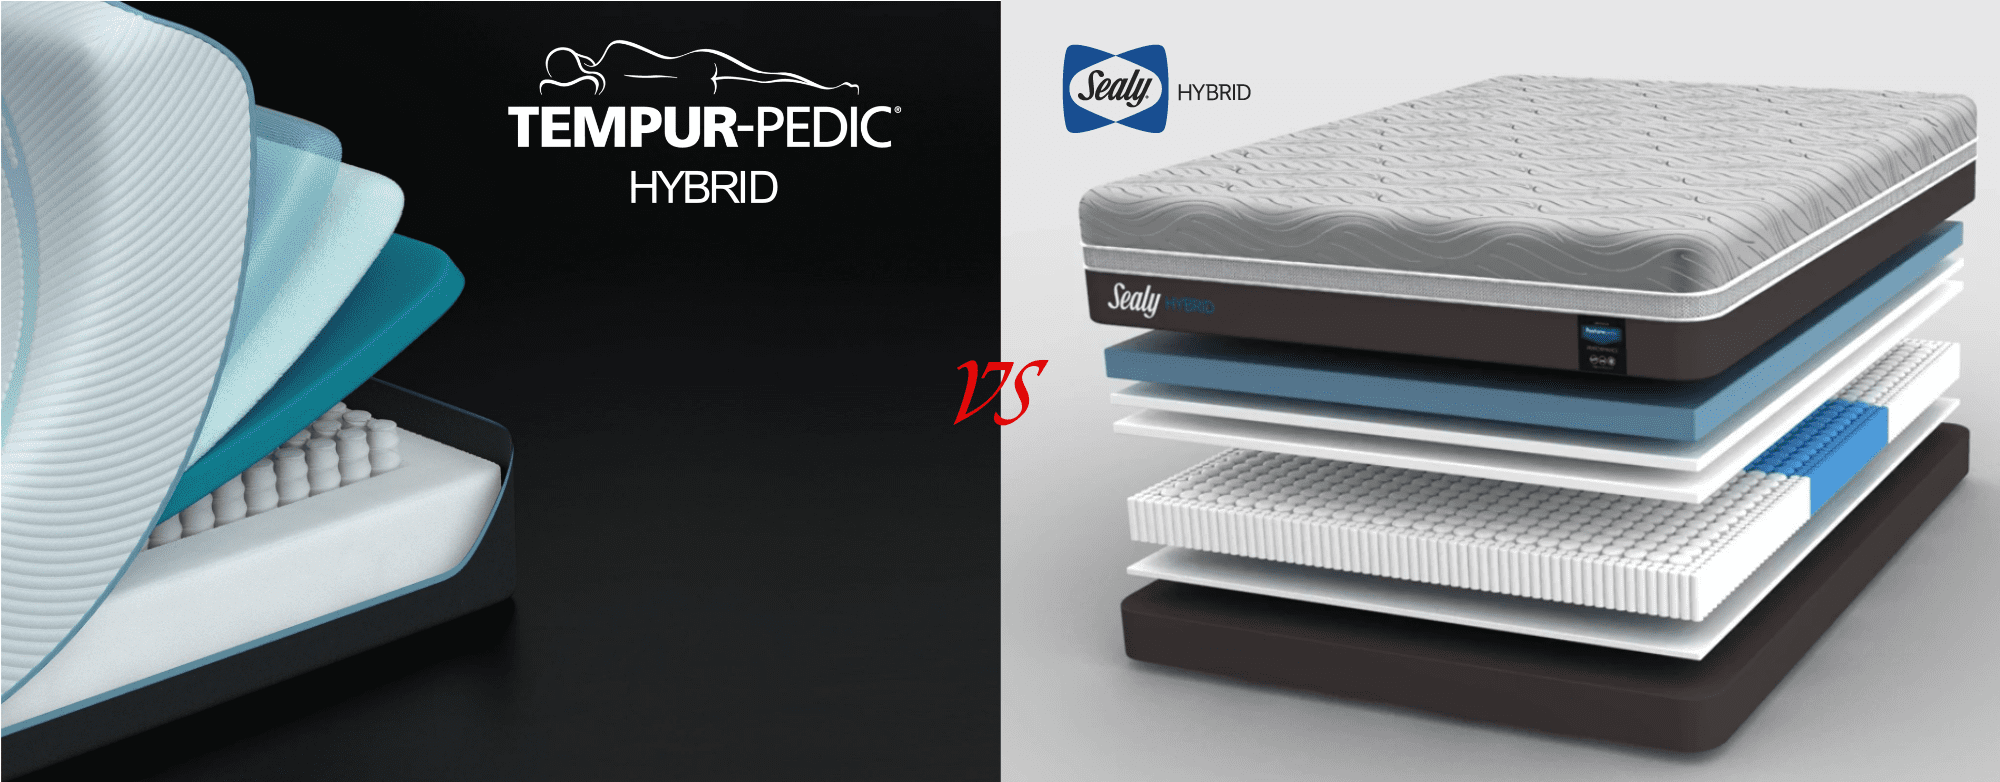 Tempur-Pedic Hybrid vs Sealy Hybrid